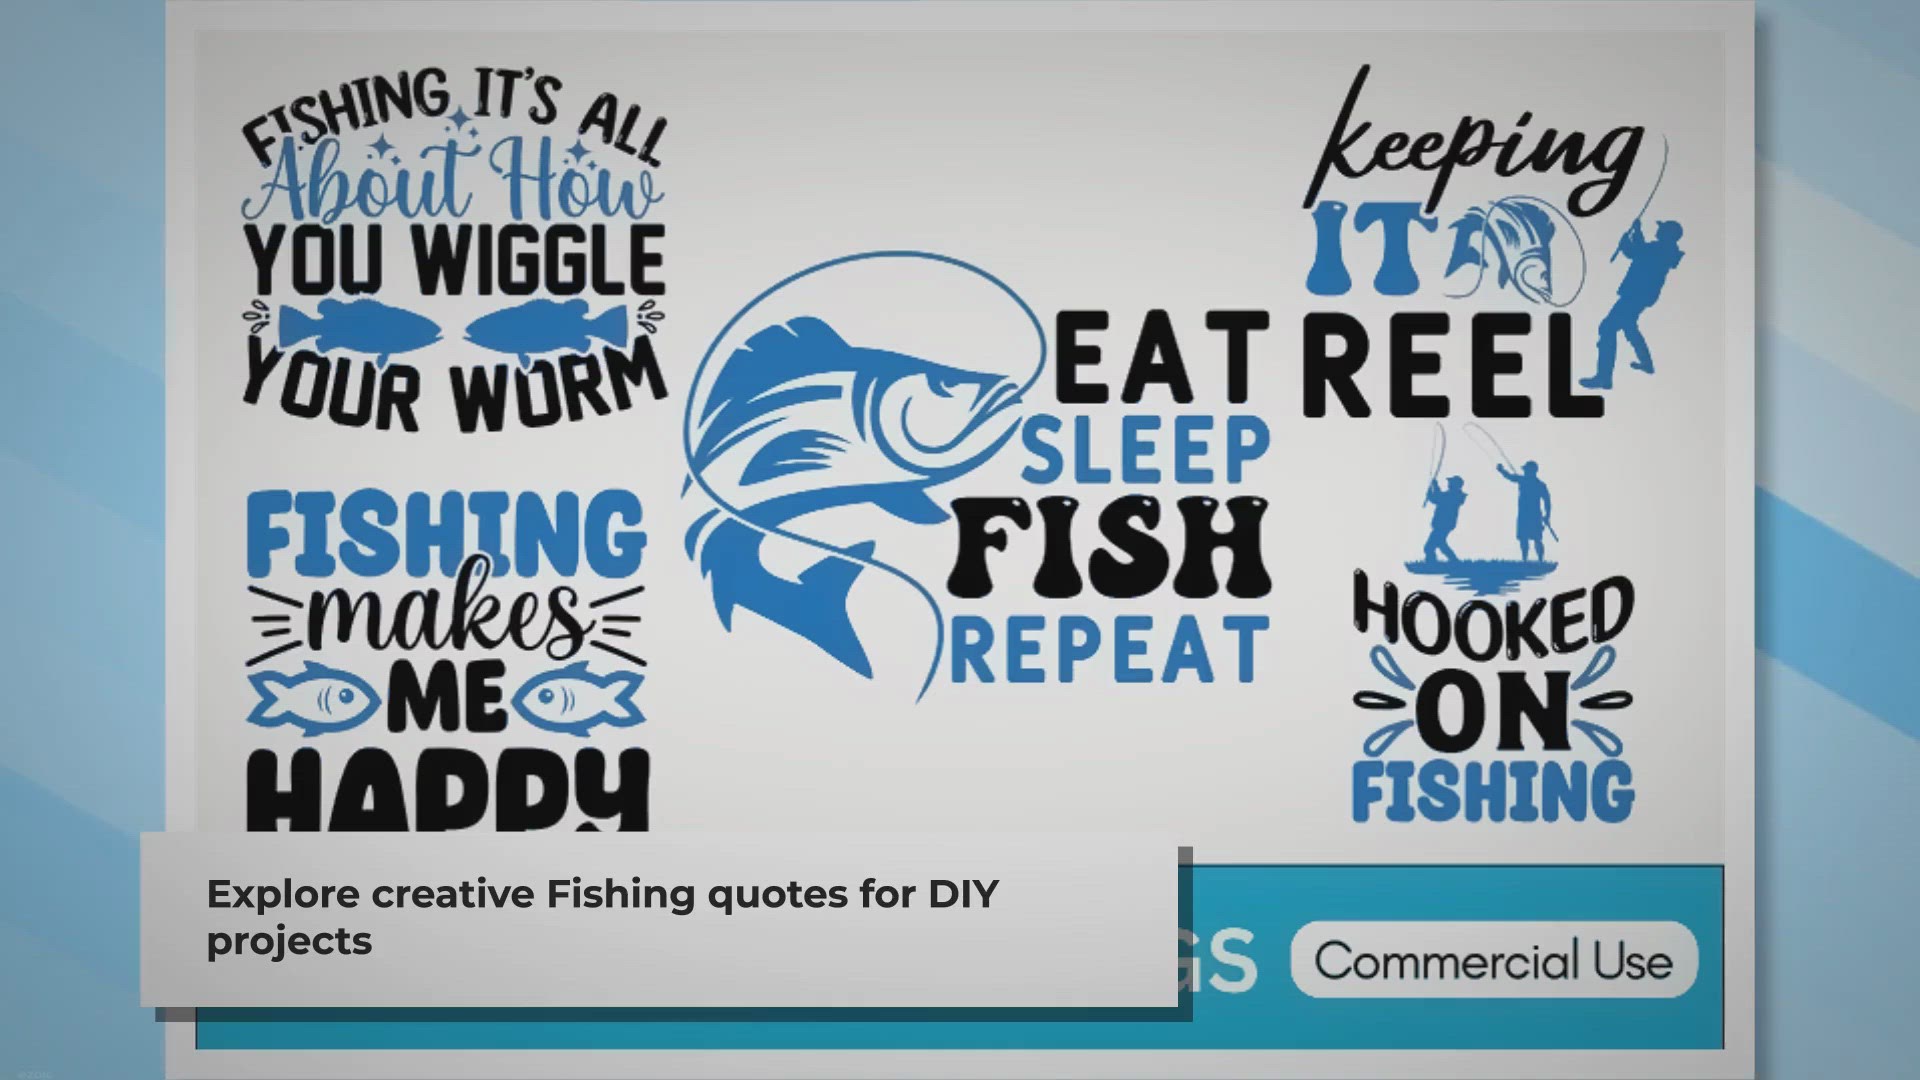 Reel Women Fish SVG Cut File, Happy Fishing Svg, Fishing Quotes